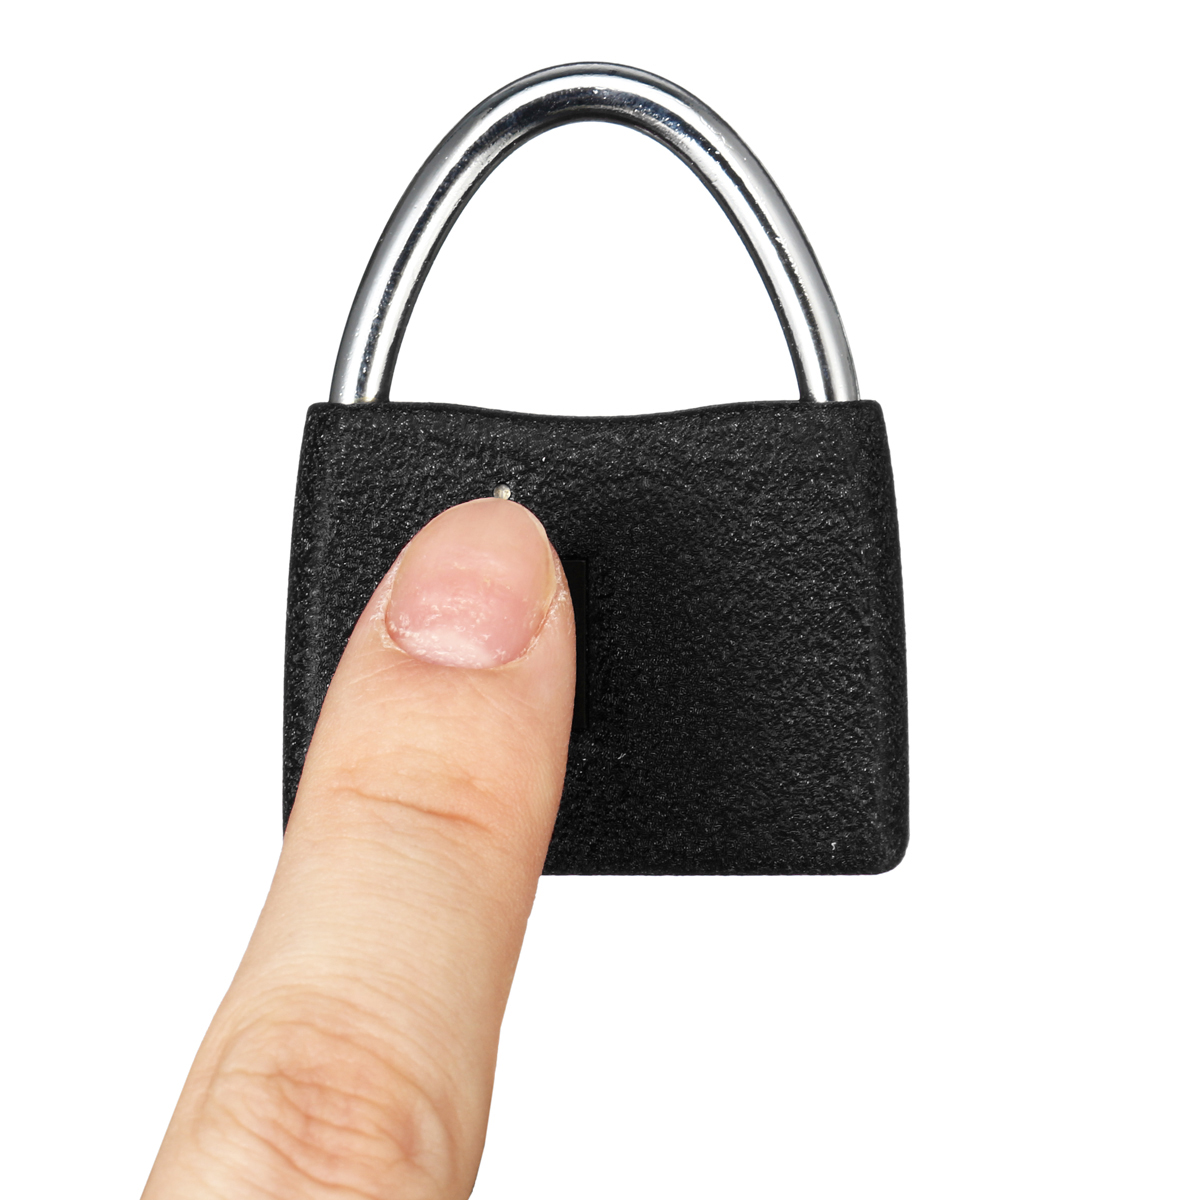 Portable-Smart-Keyless-Luggage-Door-Lock-Anti-Theft-Fingerprint-Security-Padlock-1456418-7